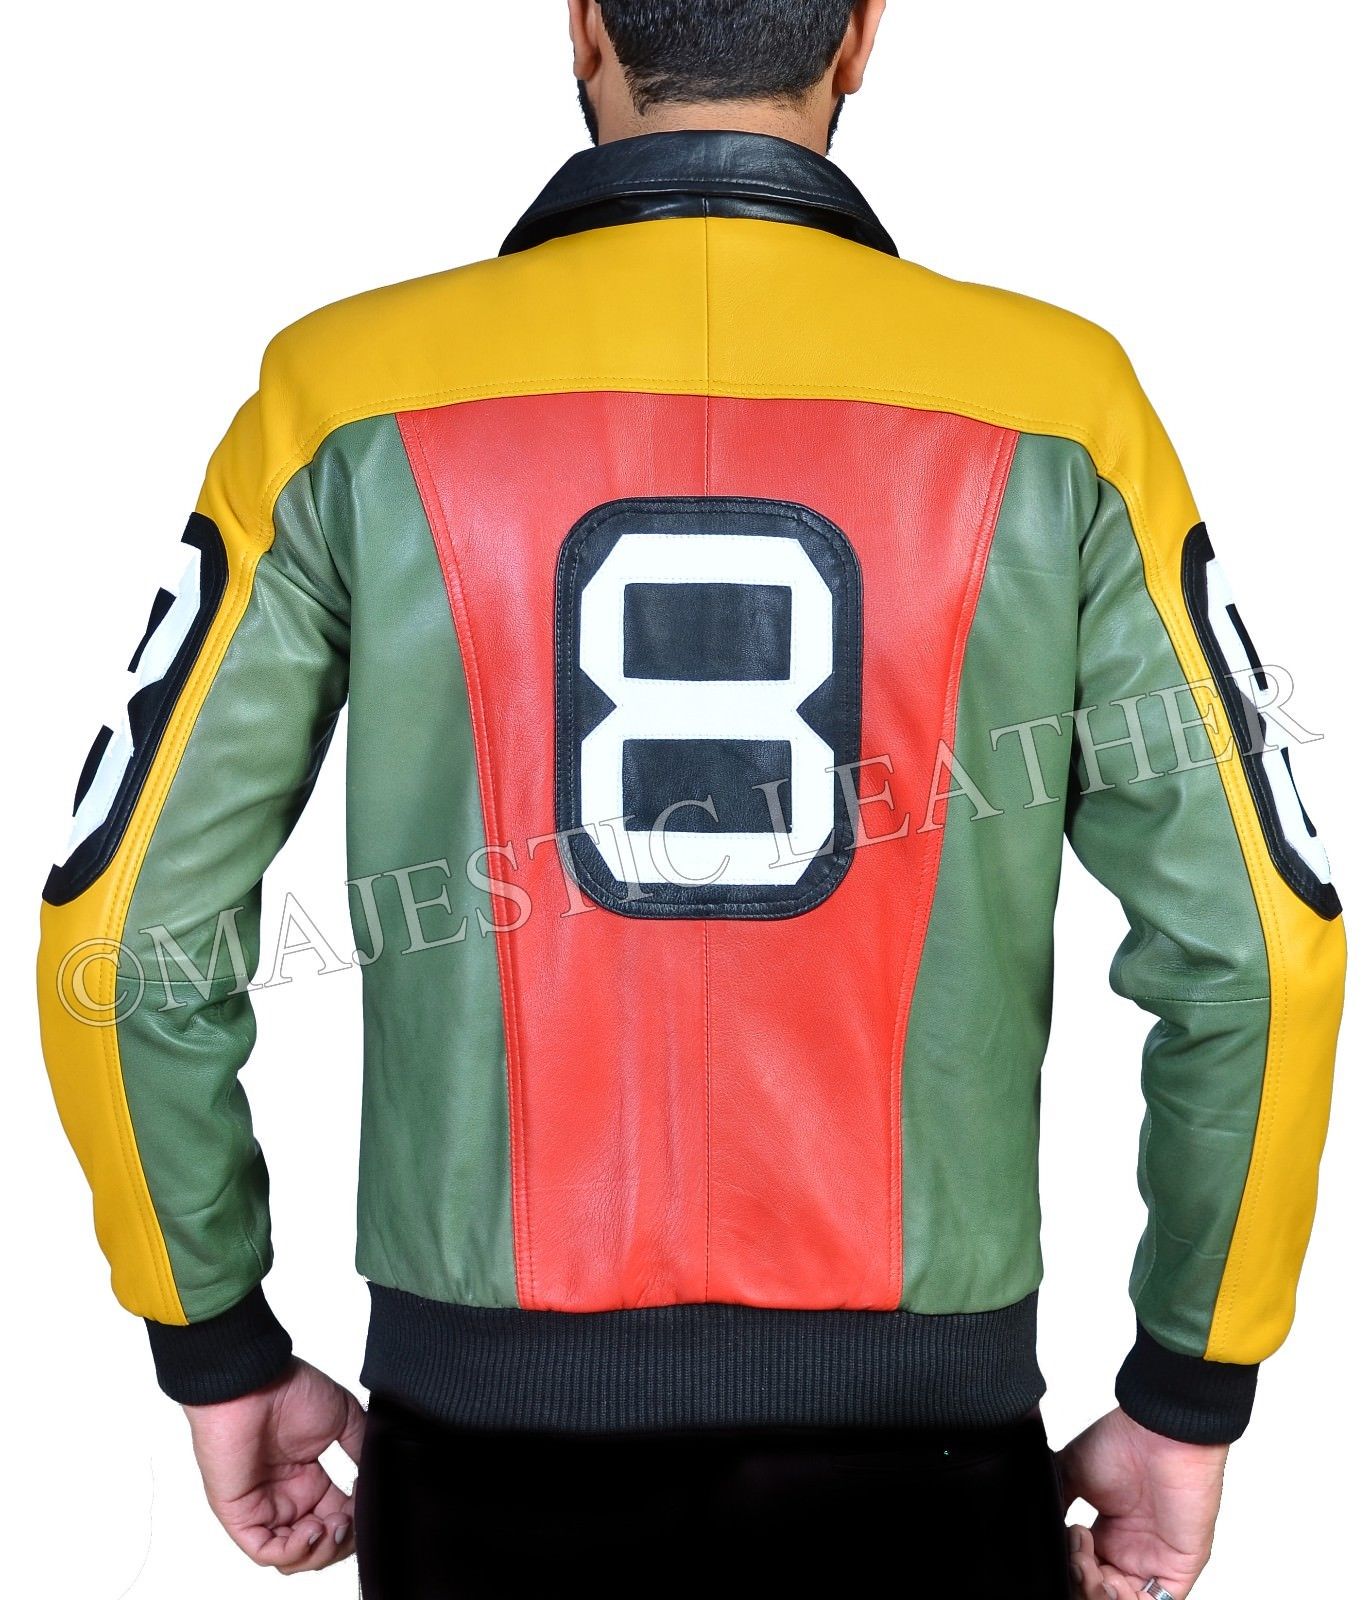 8 ball bomber jacket